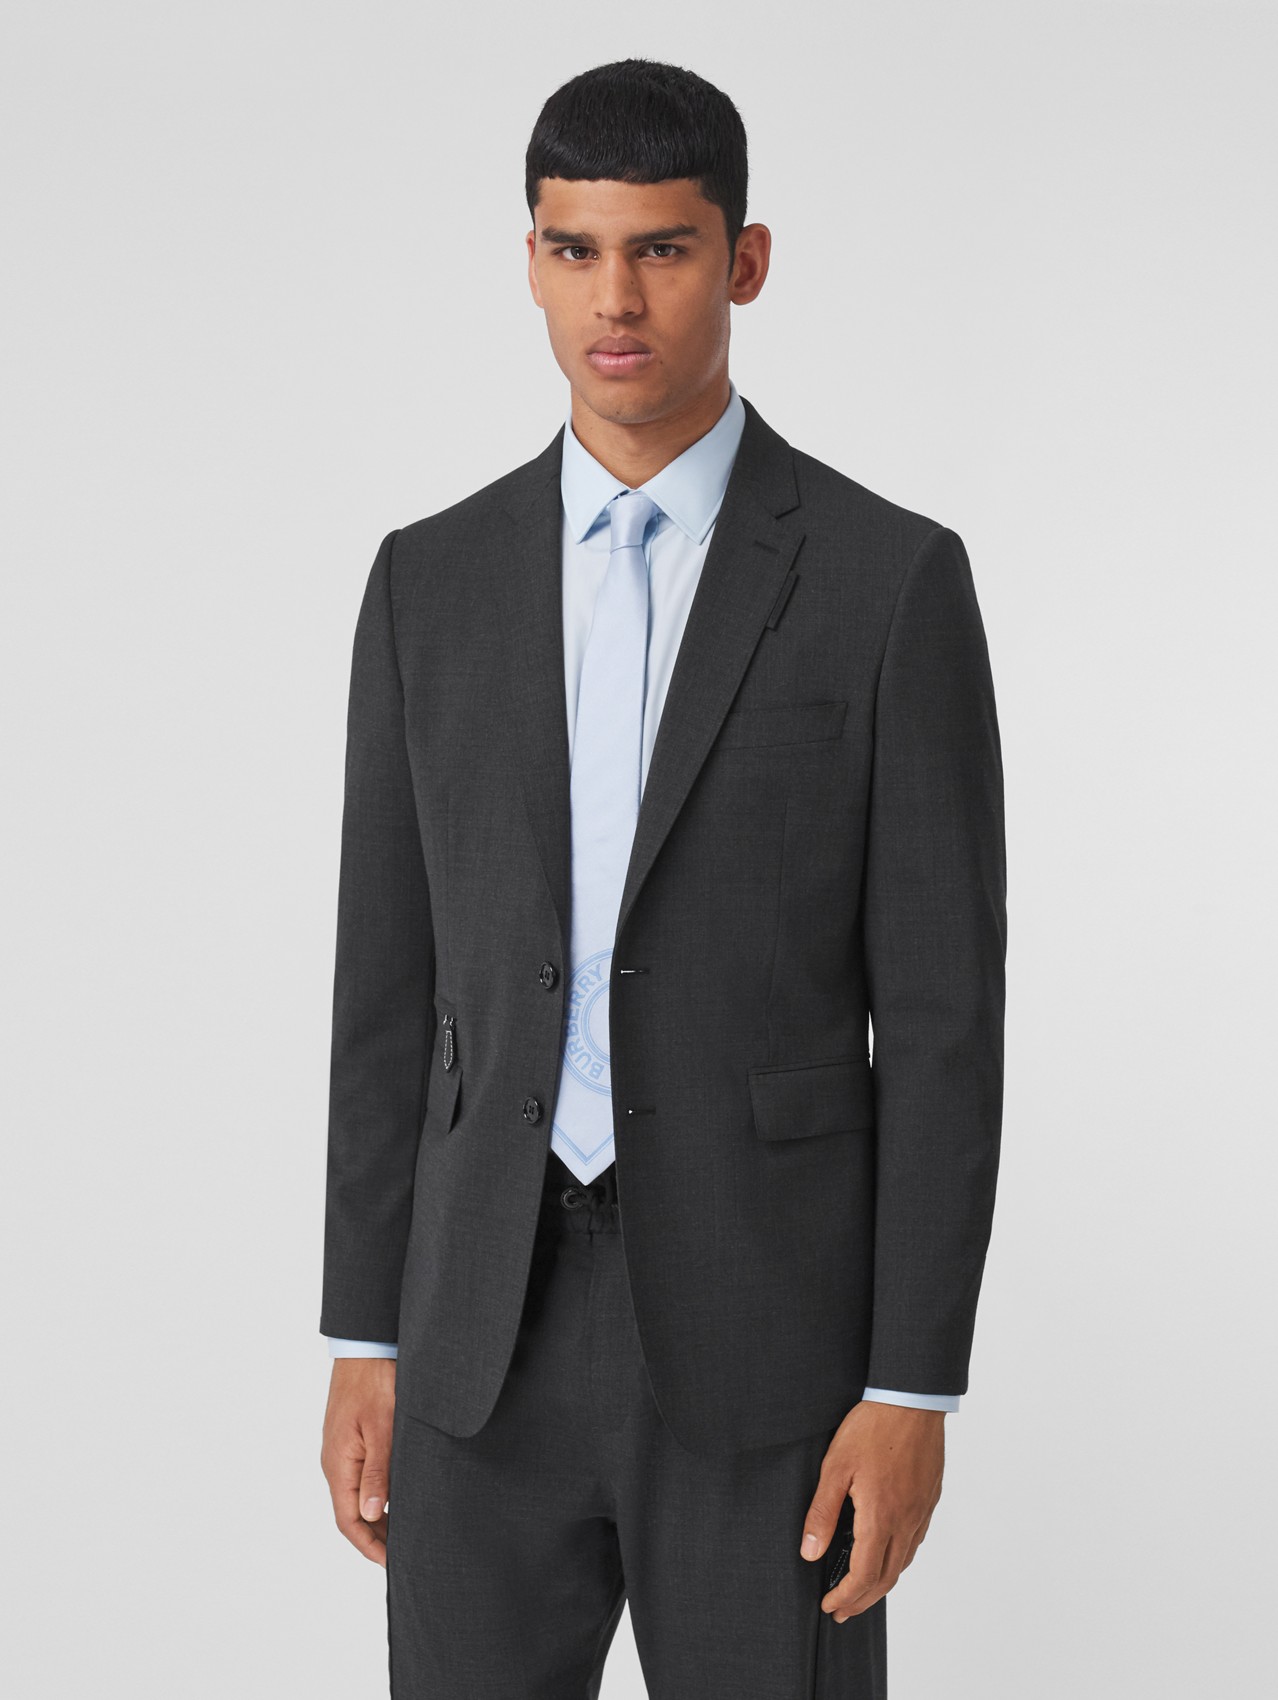 Pocket Detail Stretch Wool Tailored Jacket in Dark Grey Melange